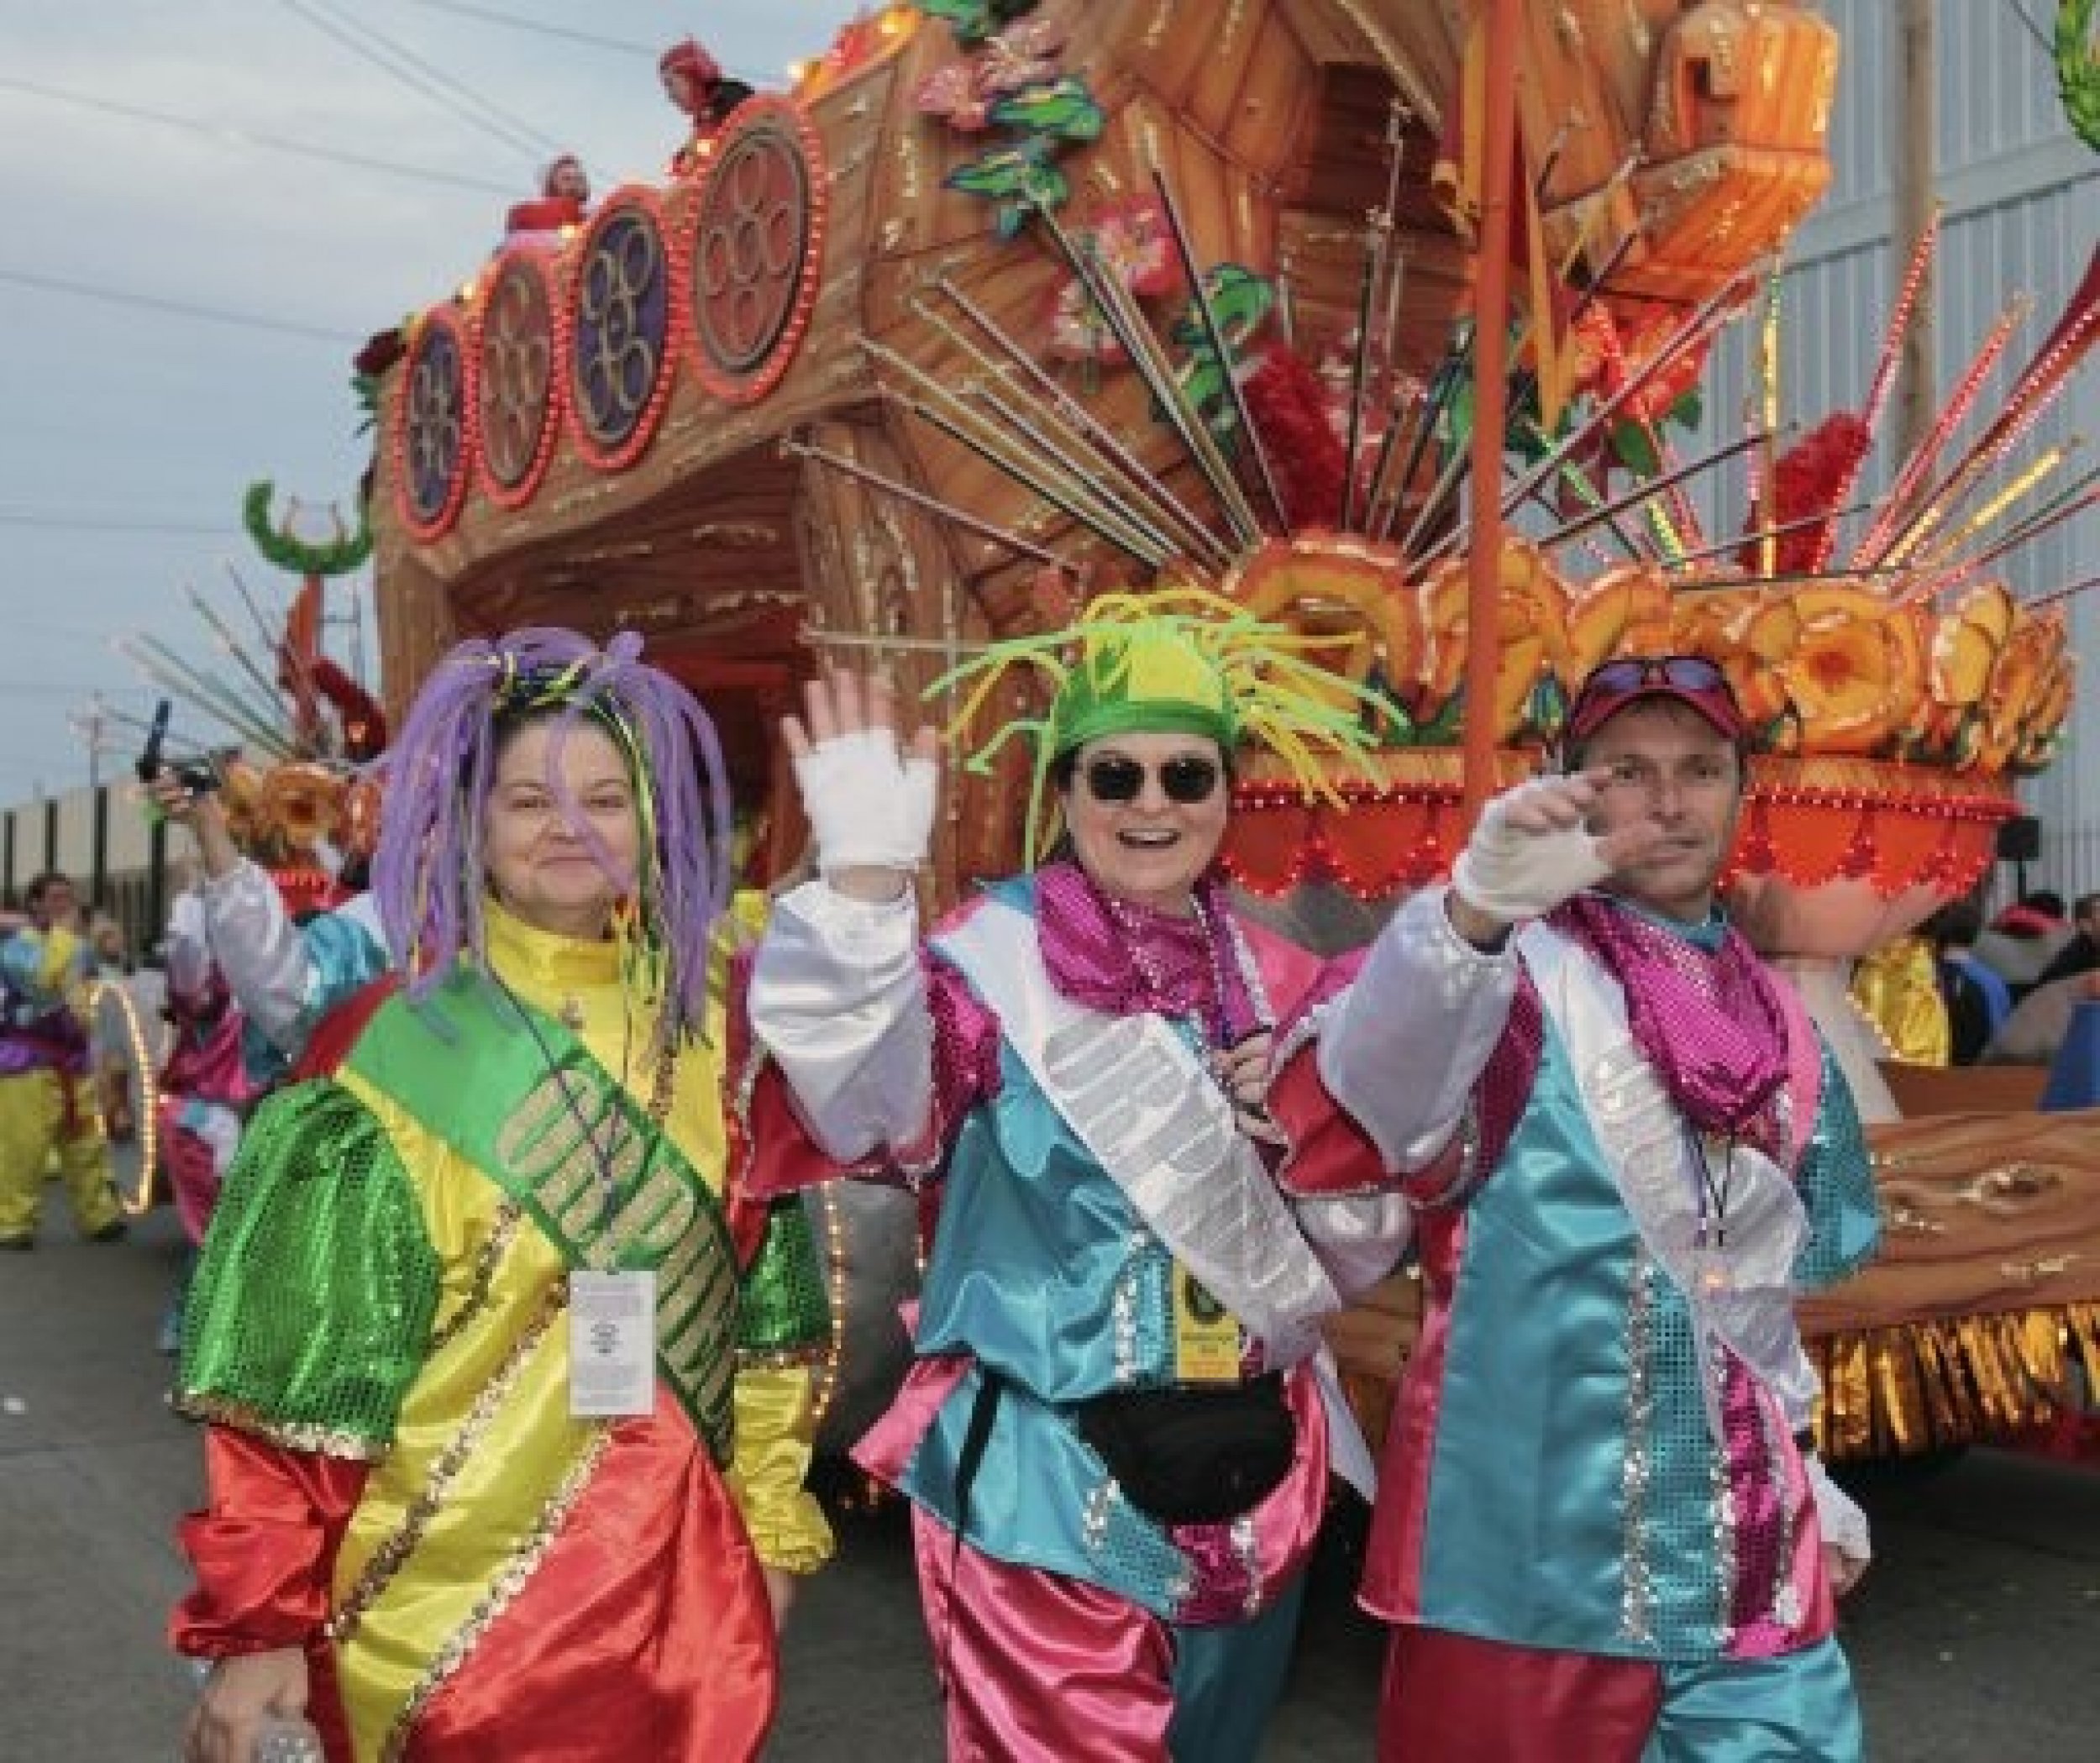 Mardi gras 2012 New Orleans